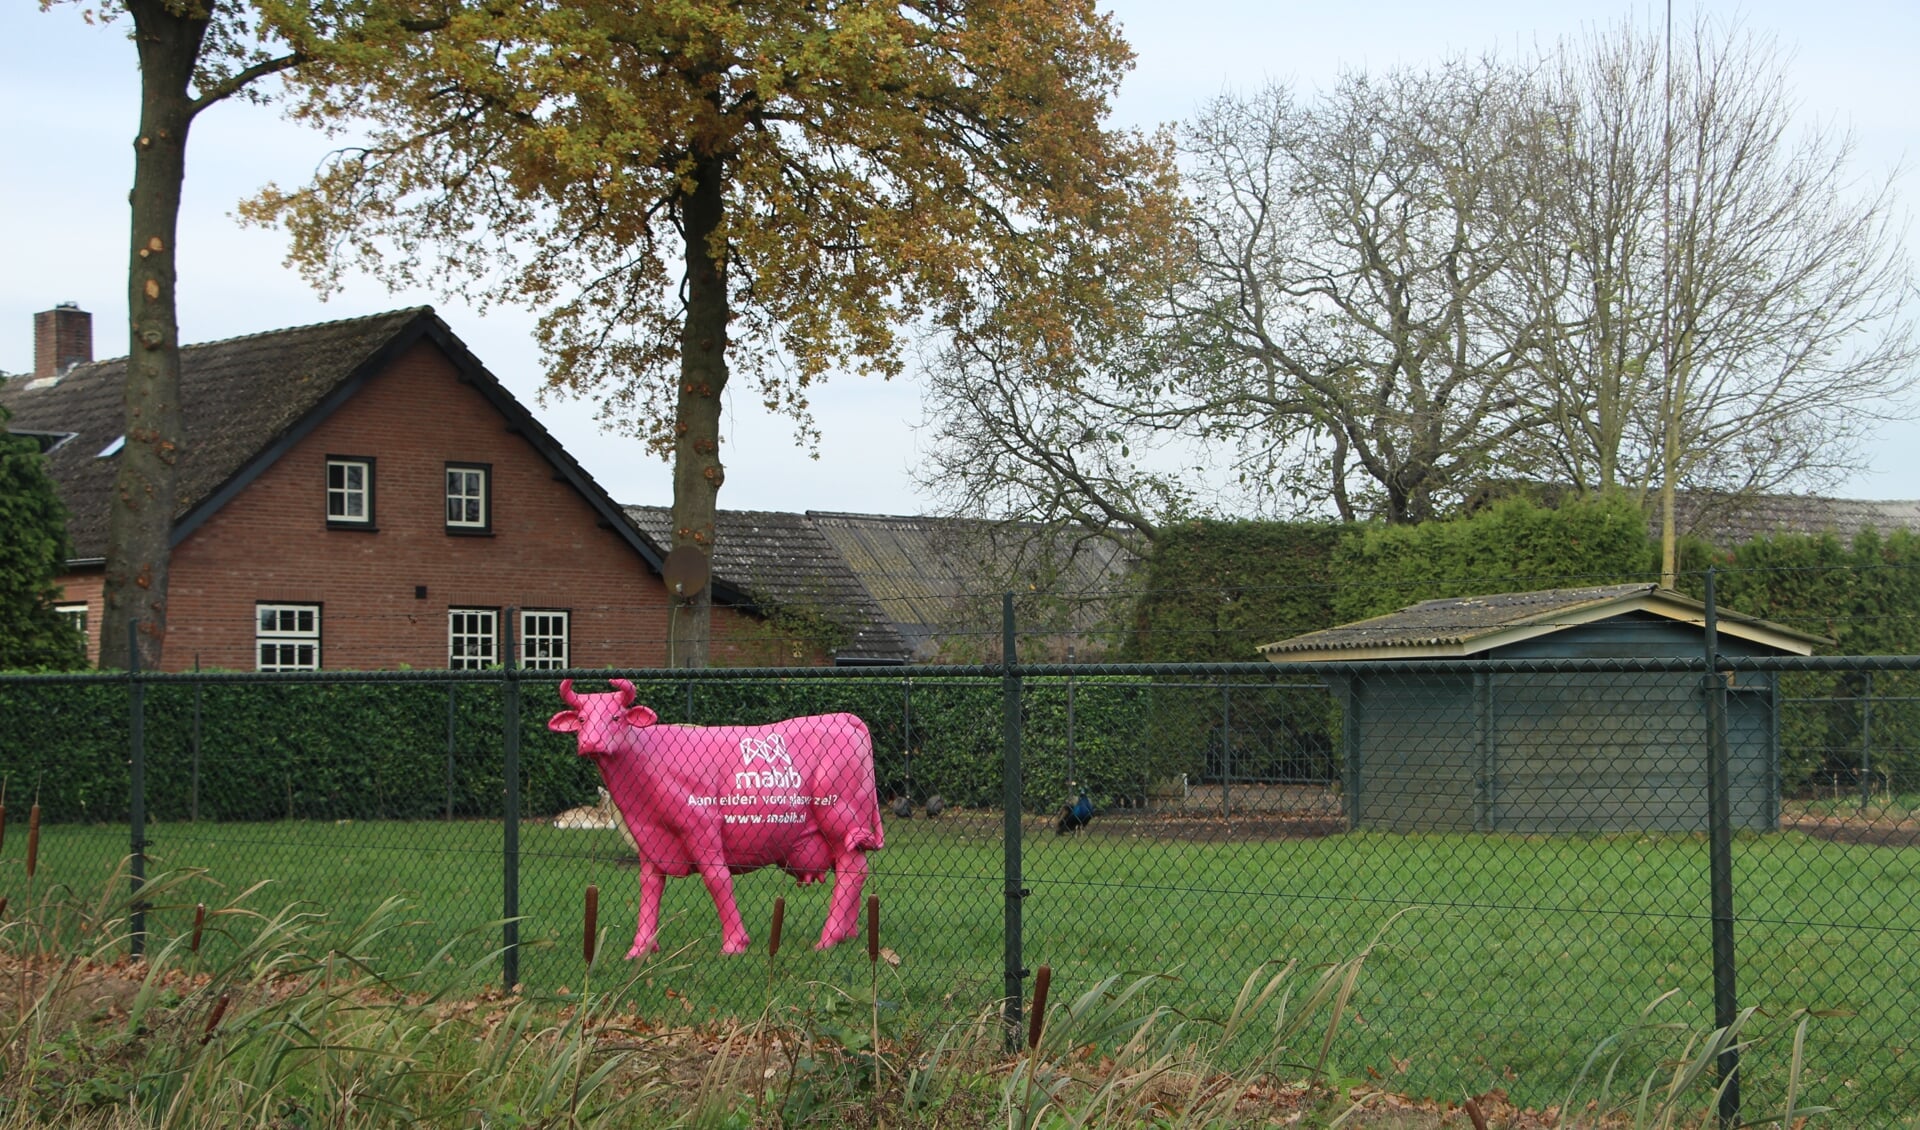 De campagne van Mabib is herkenbaar aan enkele roze koeien in het buitengebied van Laarbeek